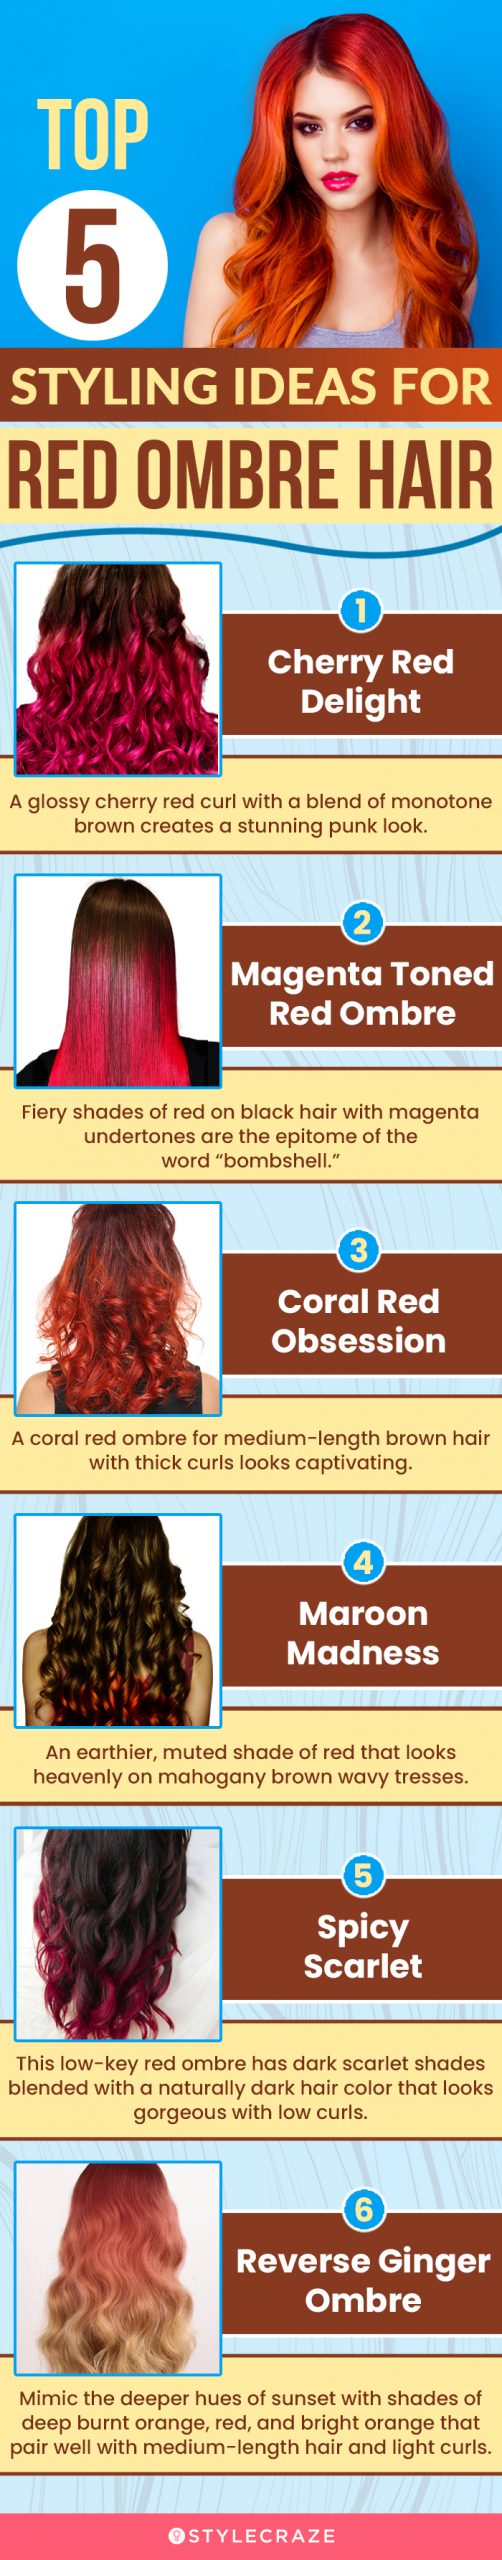 Red Hair Colors for a New Winter Look - L'Oréal Paris